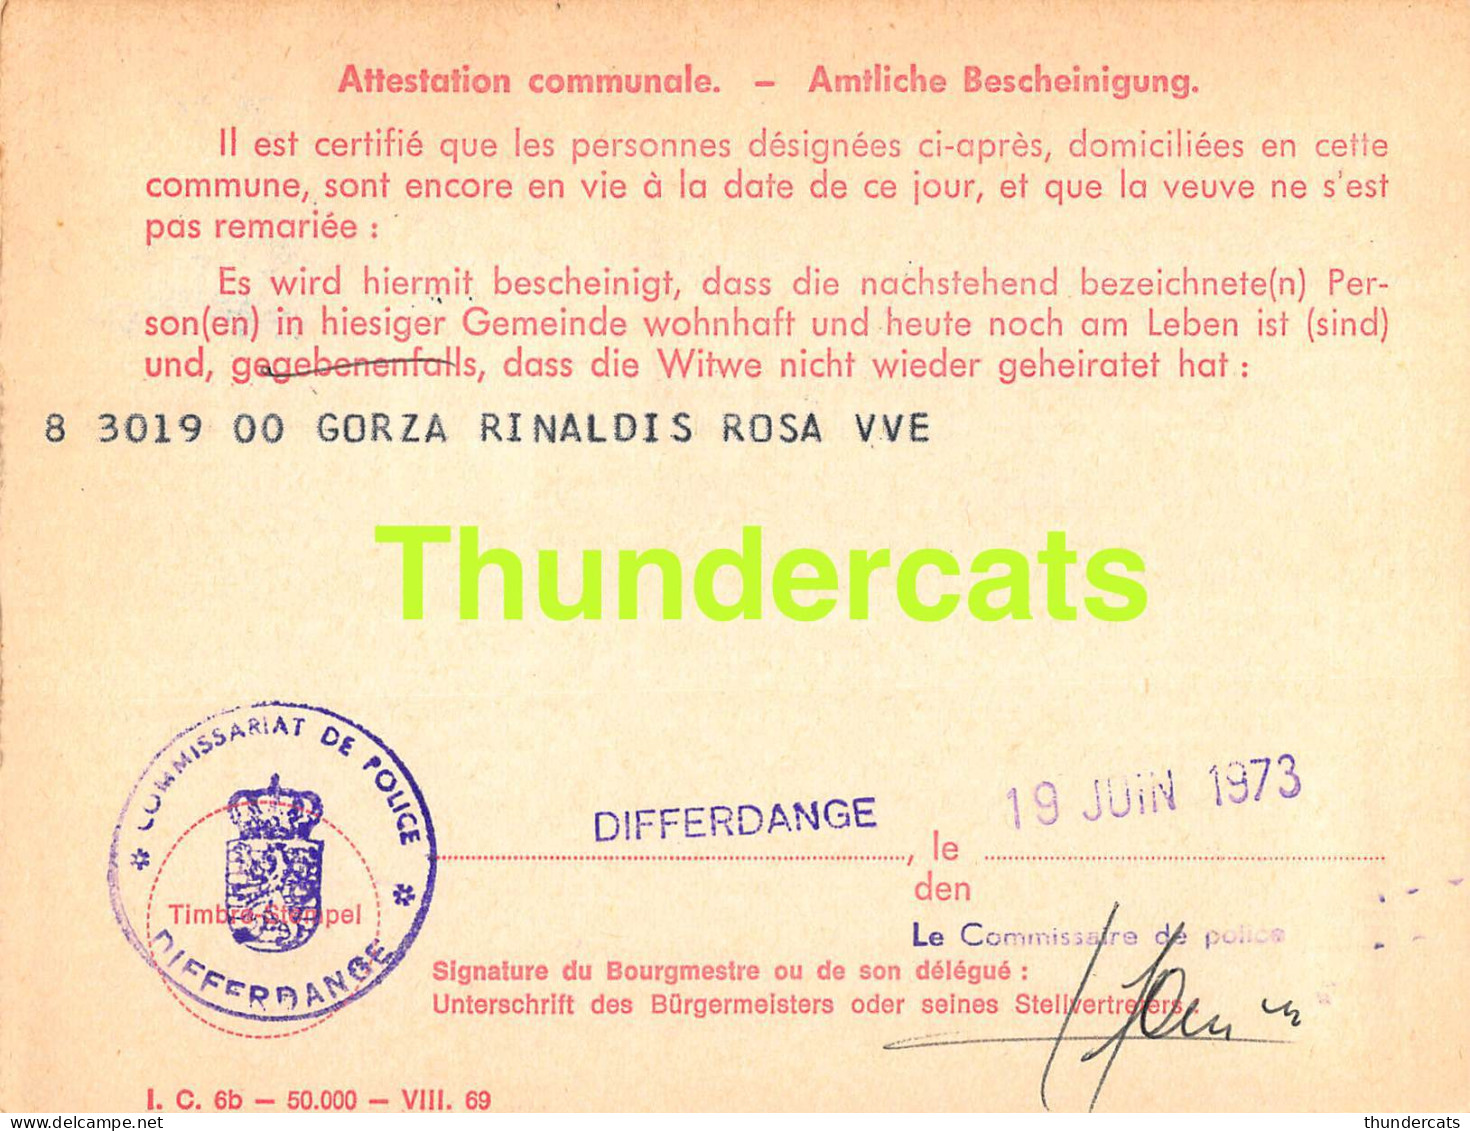 ASSURANCE VIEILLESSE INVALIDITE LUXEMBOURG 1973 GORZA RINALDIS DIFFERDANGE  - Lettres & Documents